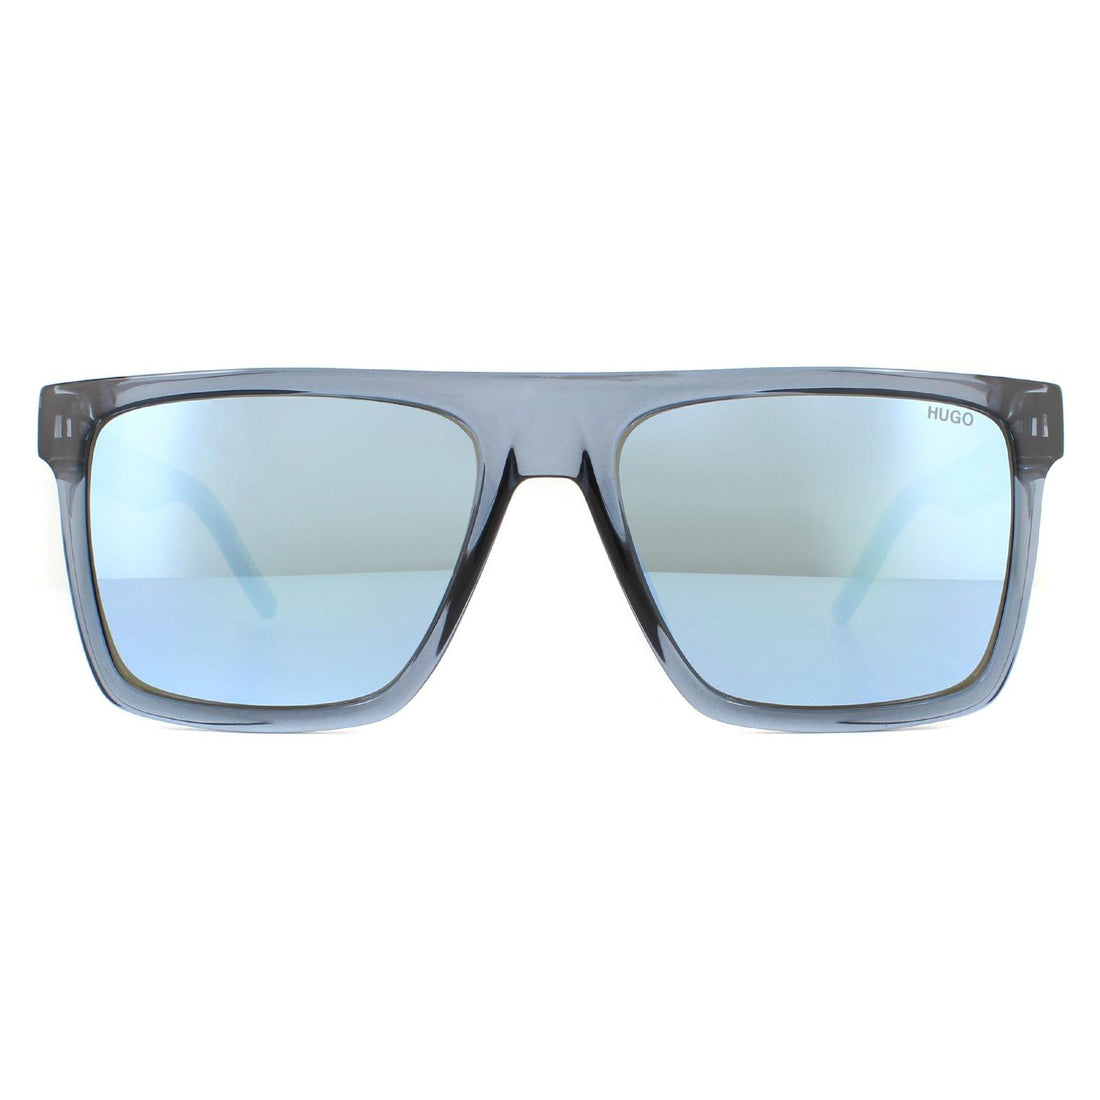 Hugo by Hugo Boss 1069/S Sunglasses Crystal Blue Blue Mirror